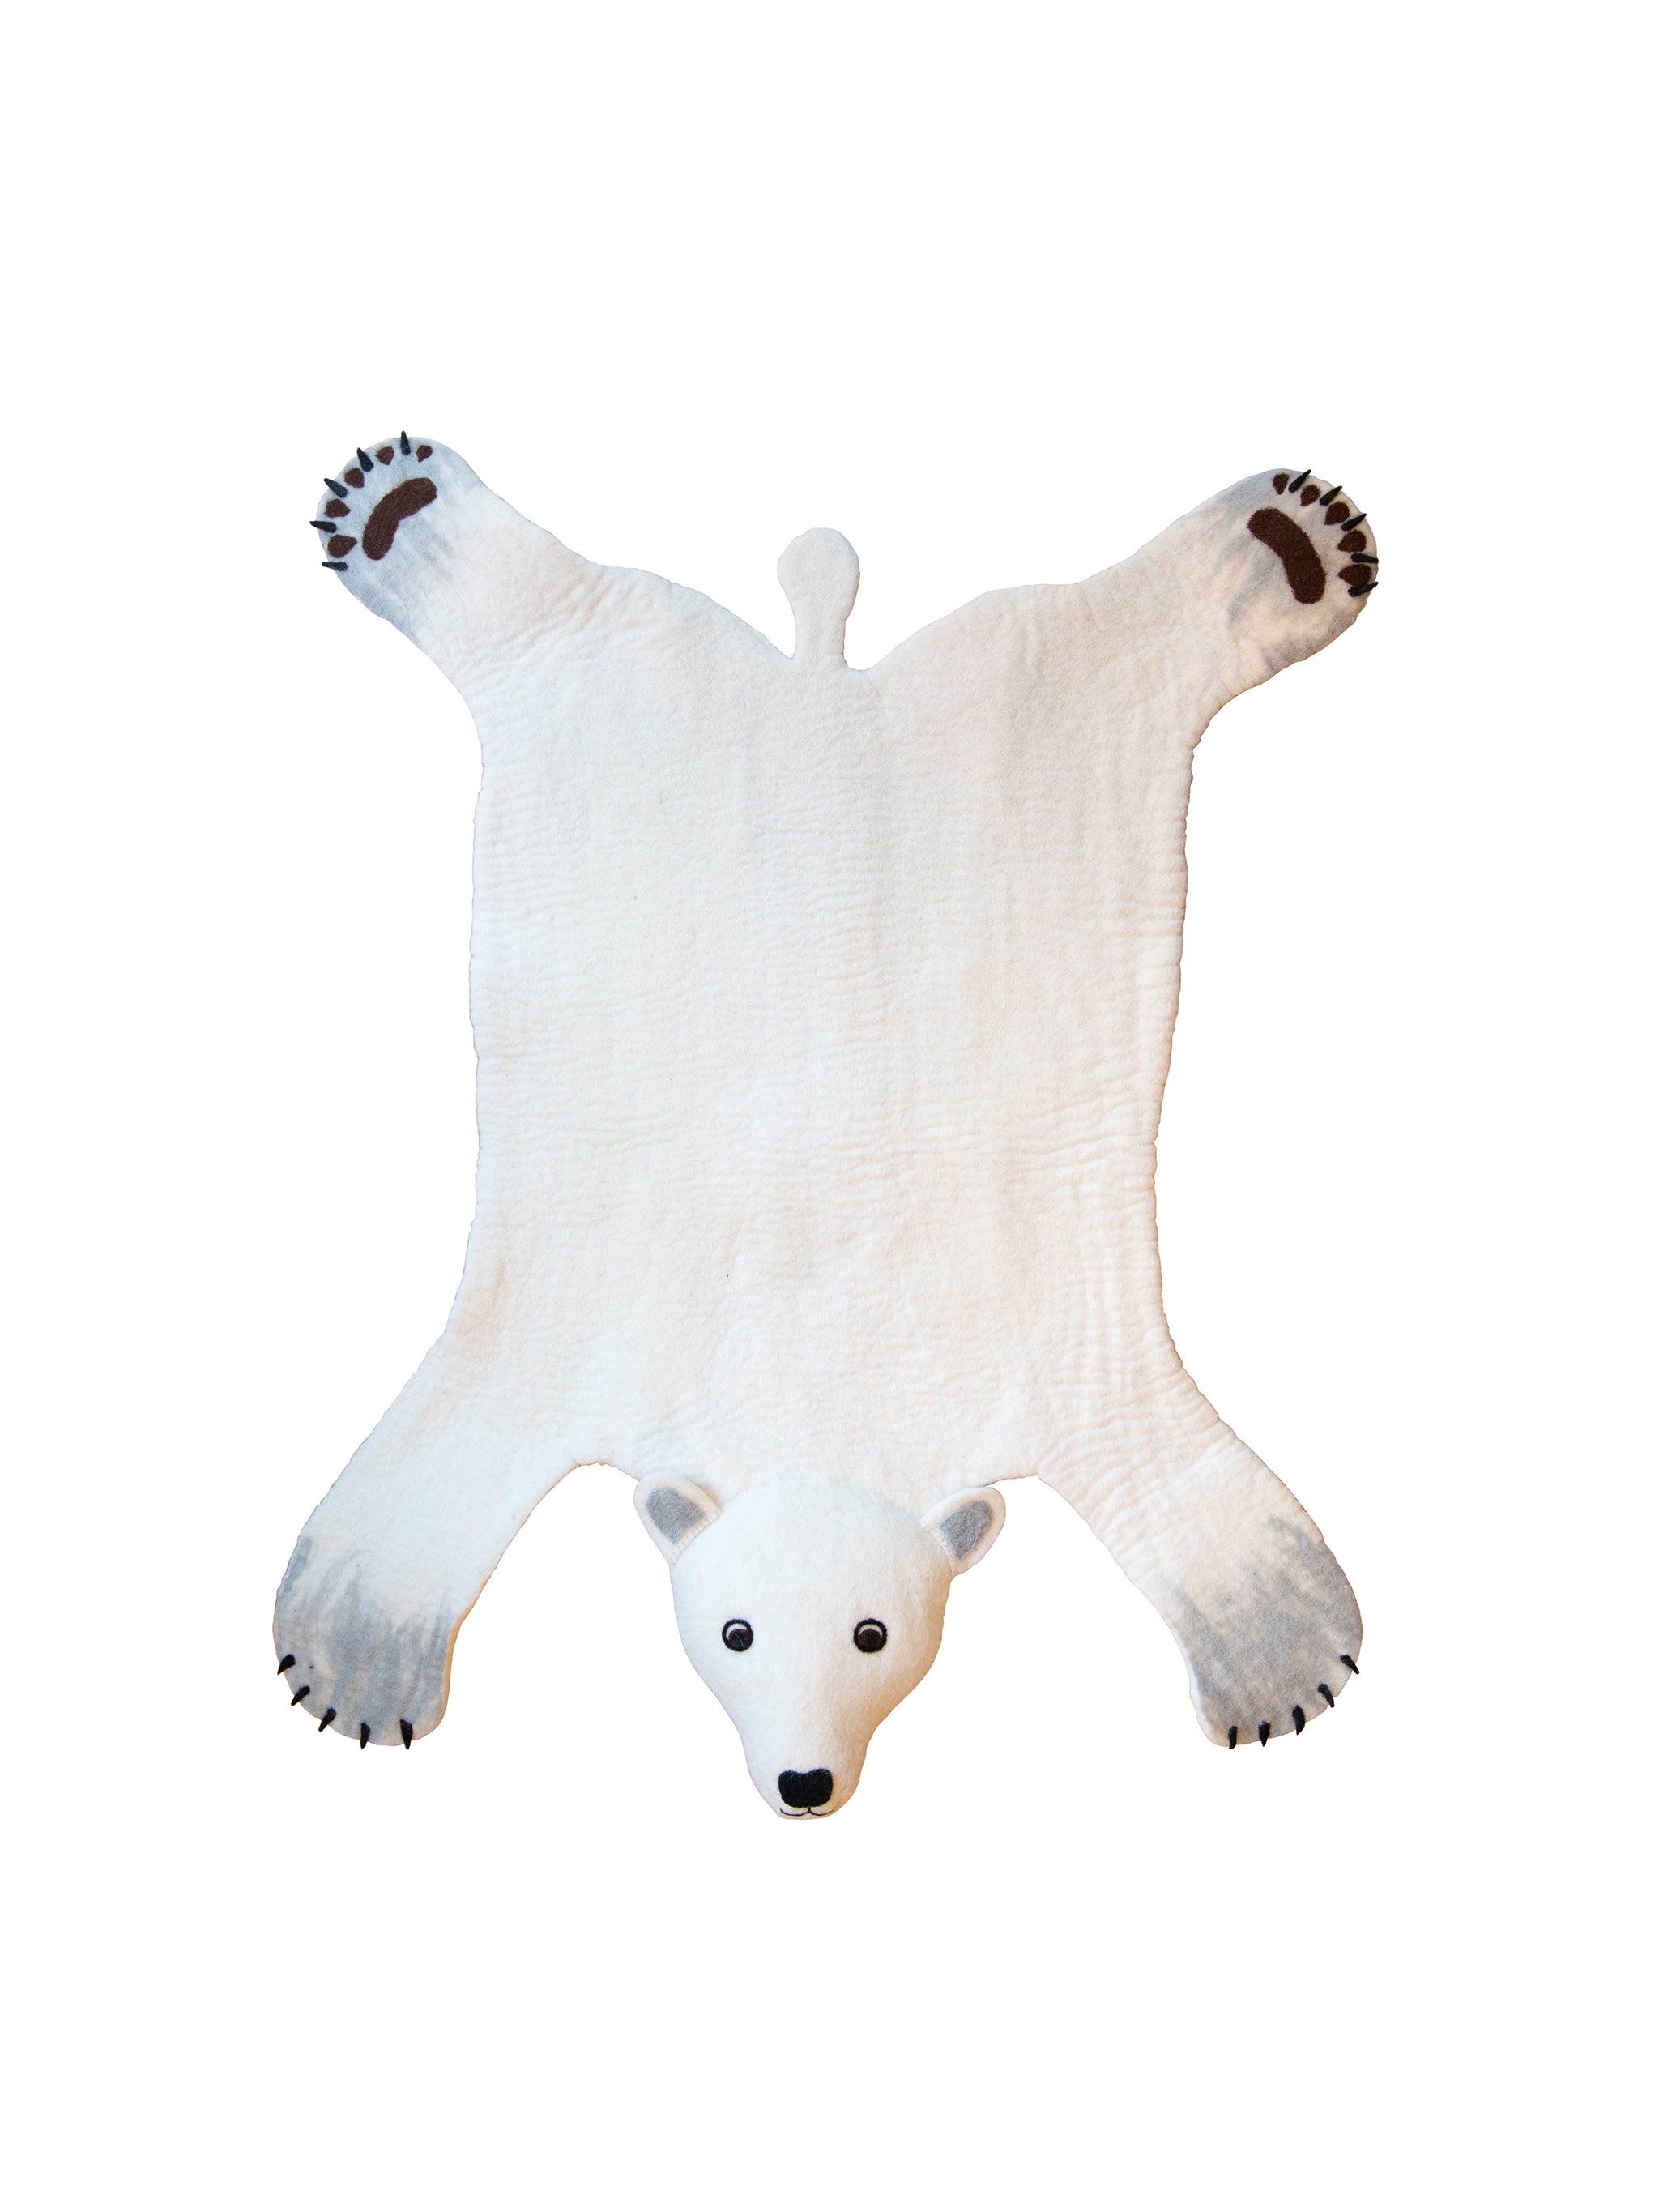 Human Made Polar Bear Rug